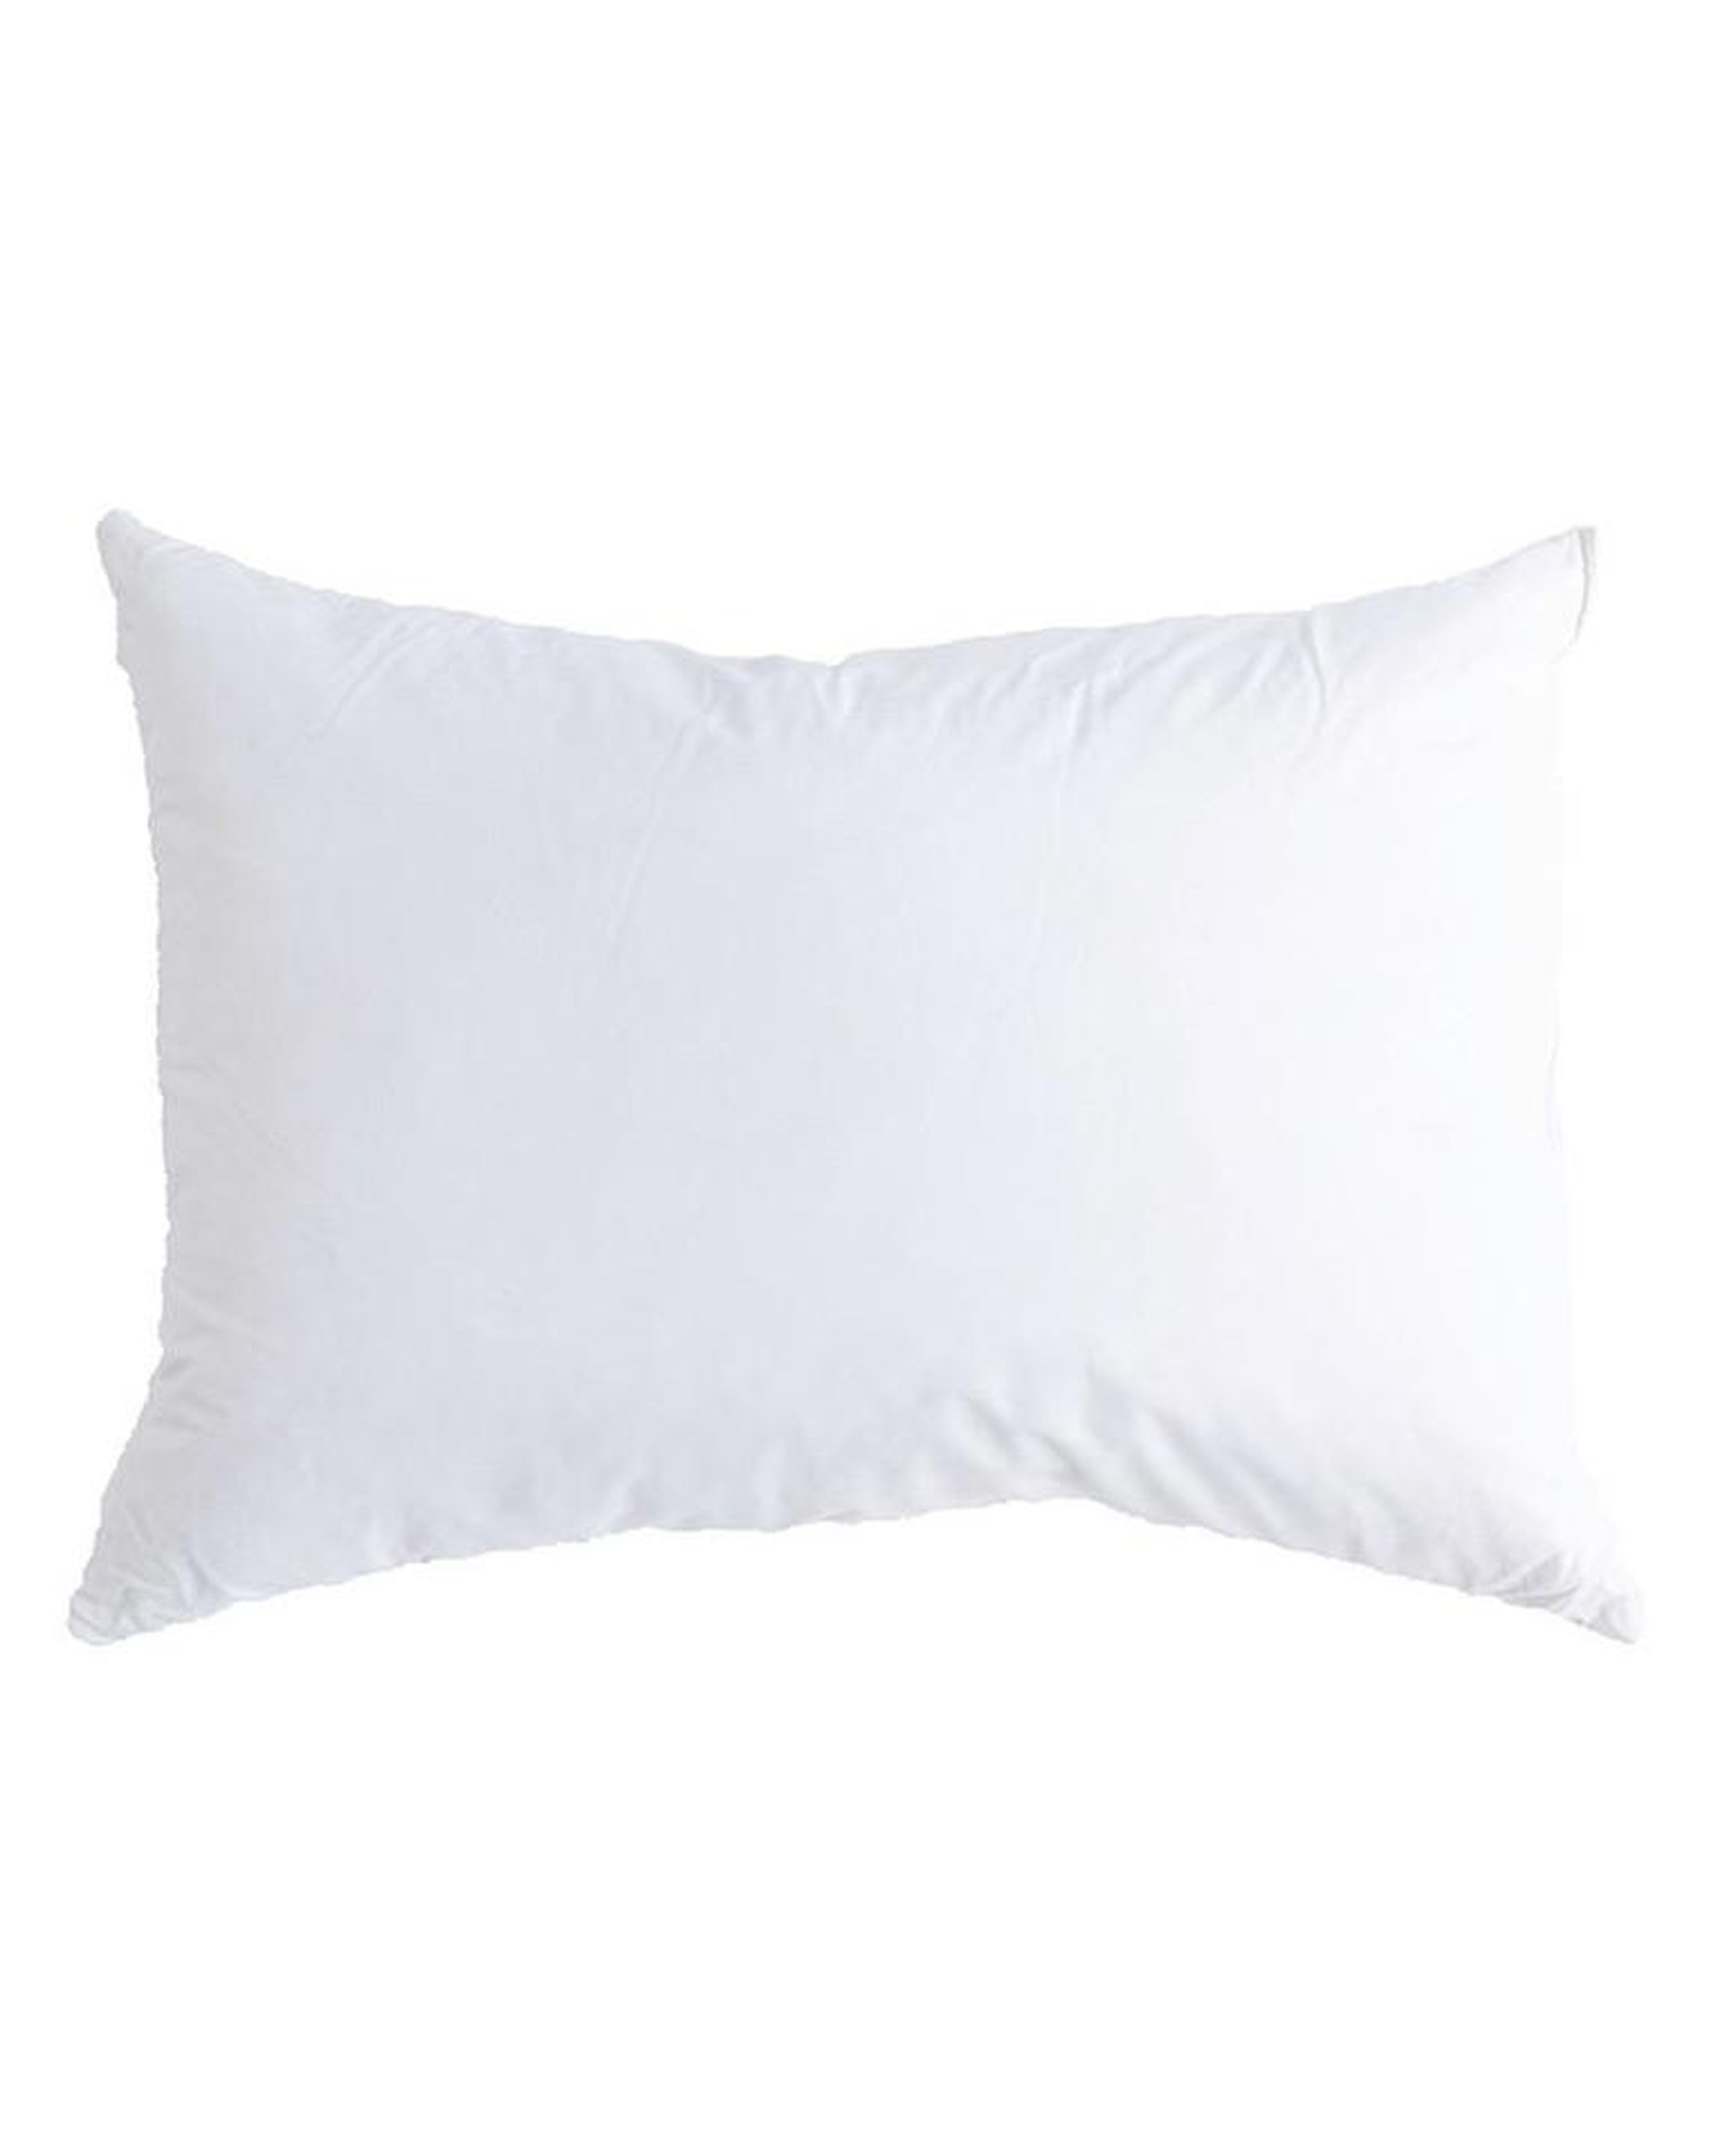 Premium Pillow Insert, 20" x 14" - McGee & Co.